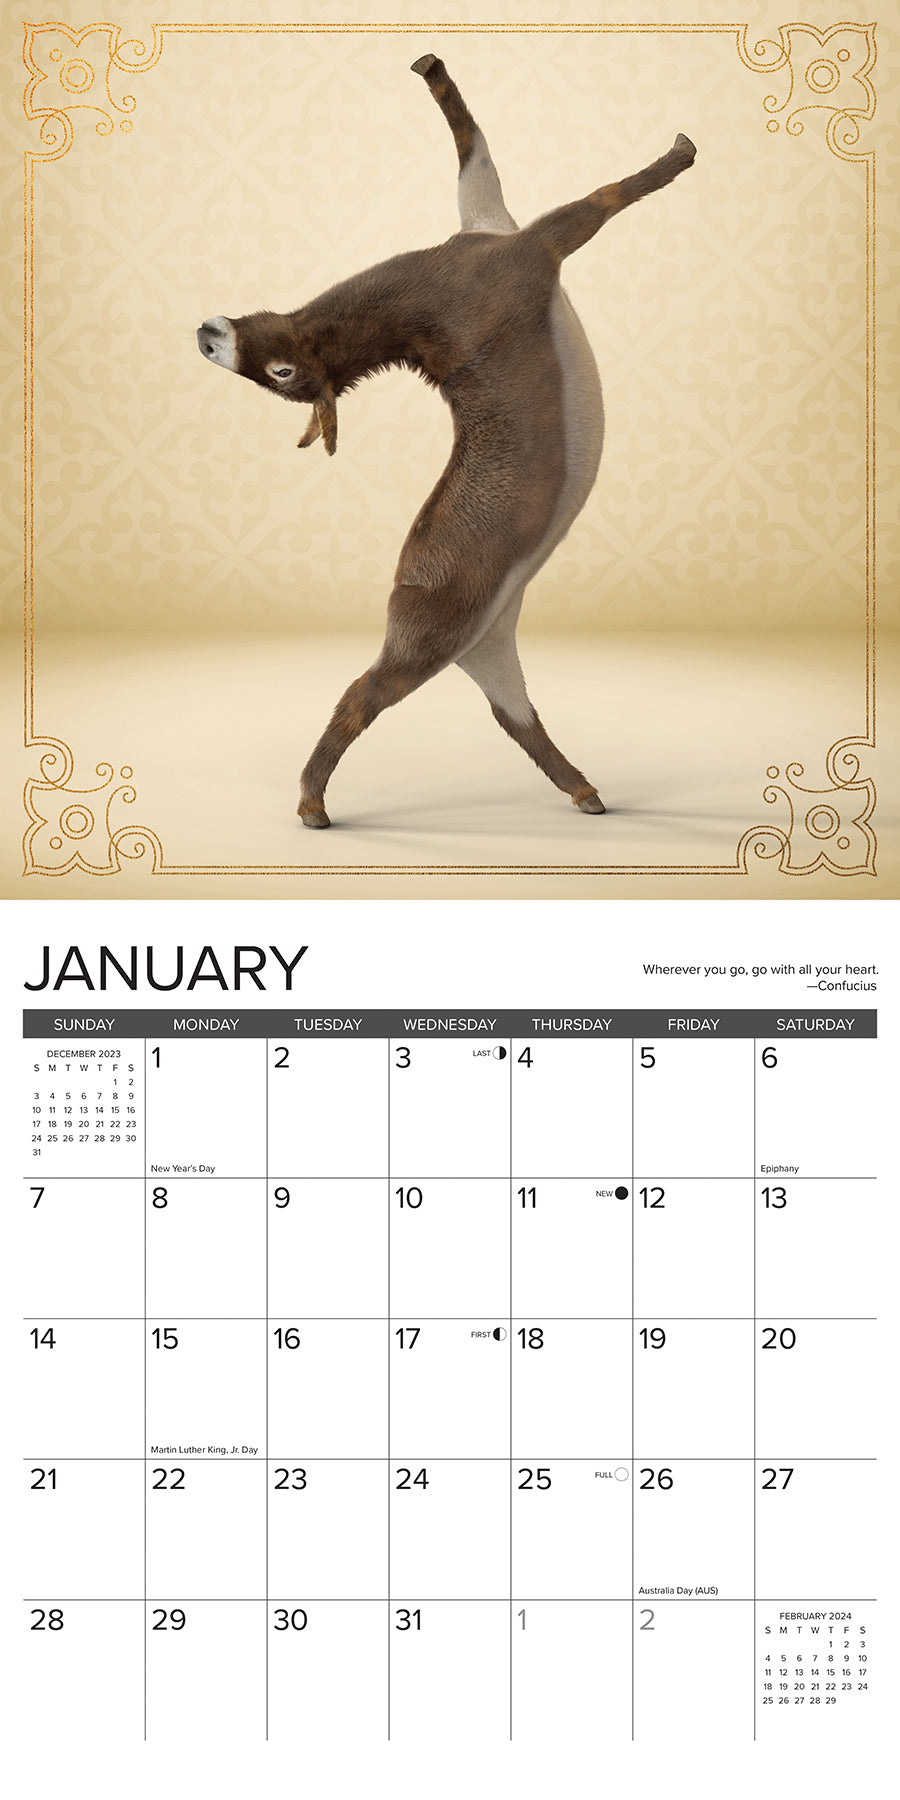 2024 Jackass Yoga - Square Wall Calendar US